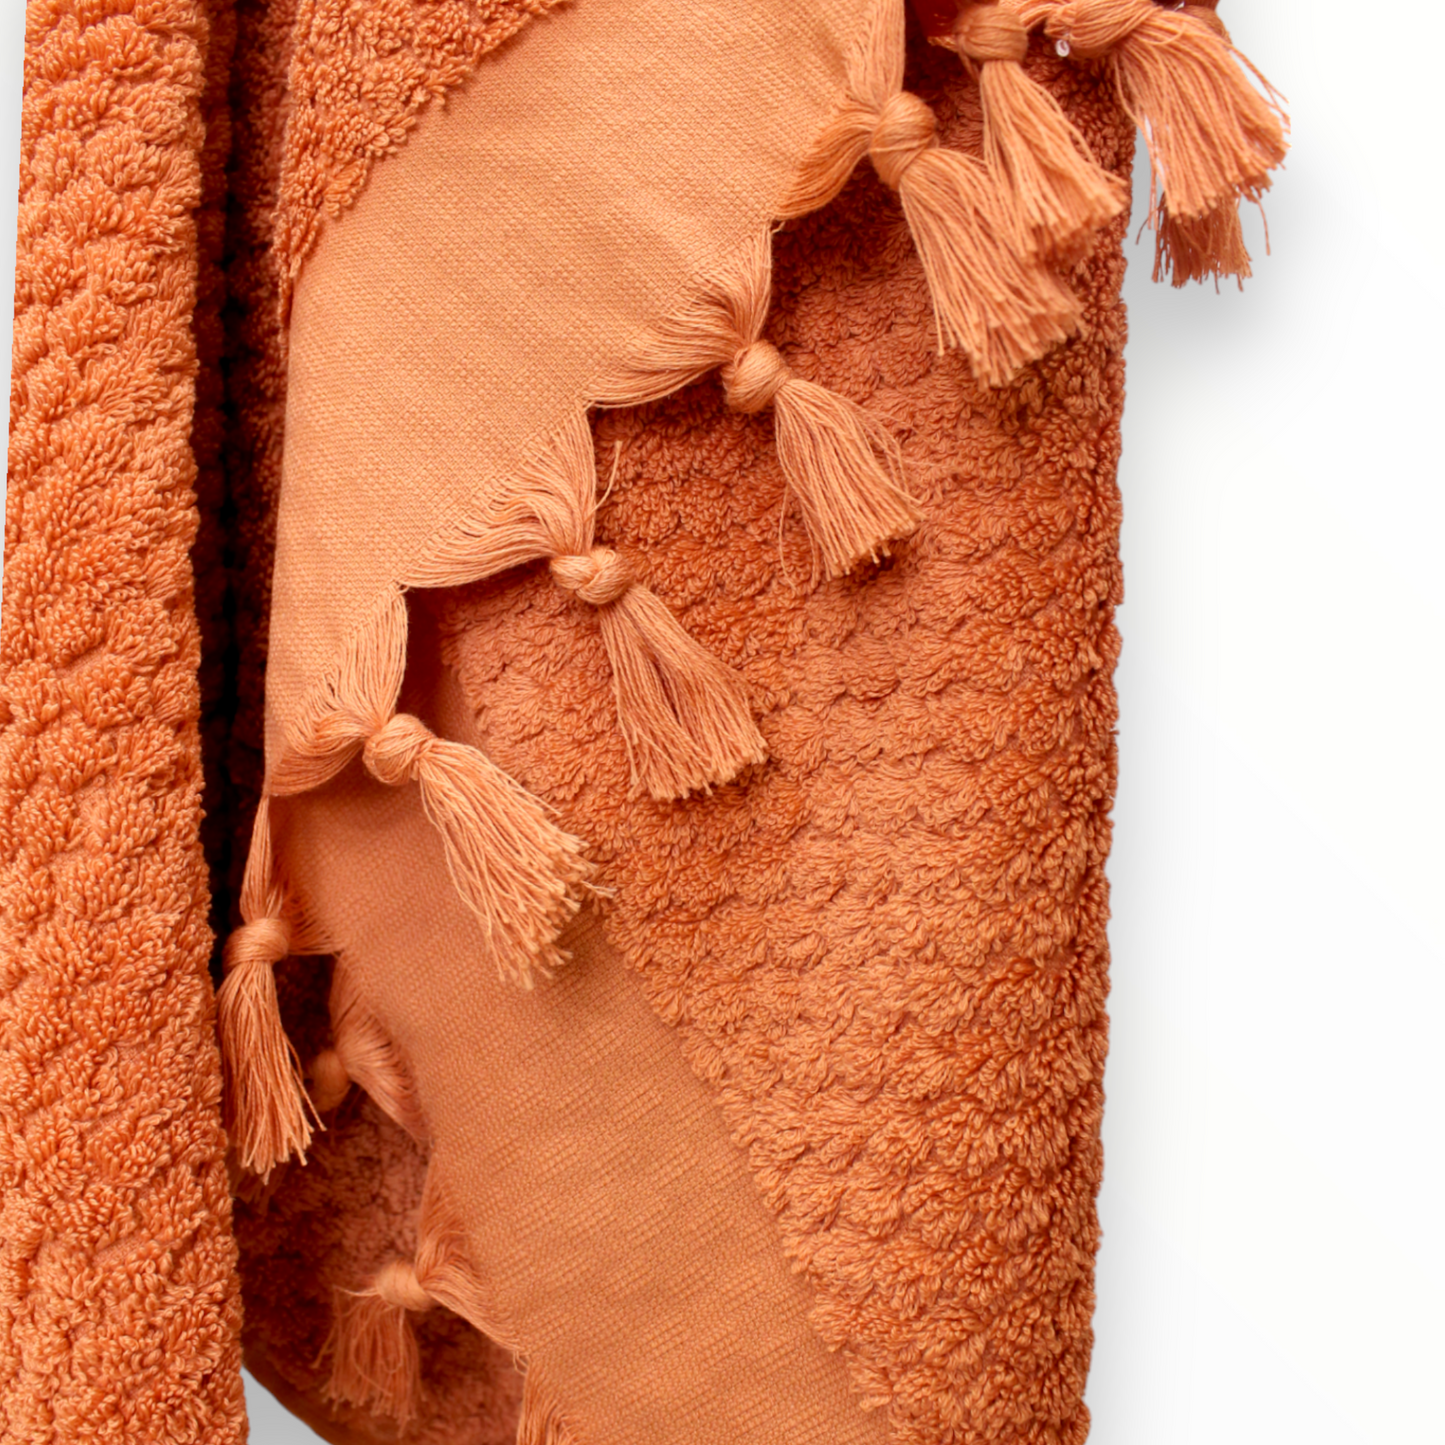 Elegant Natural Cotton Hand-Woven Turkish Terry Hammam Towel